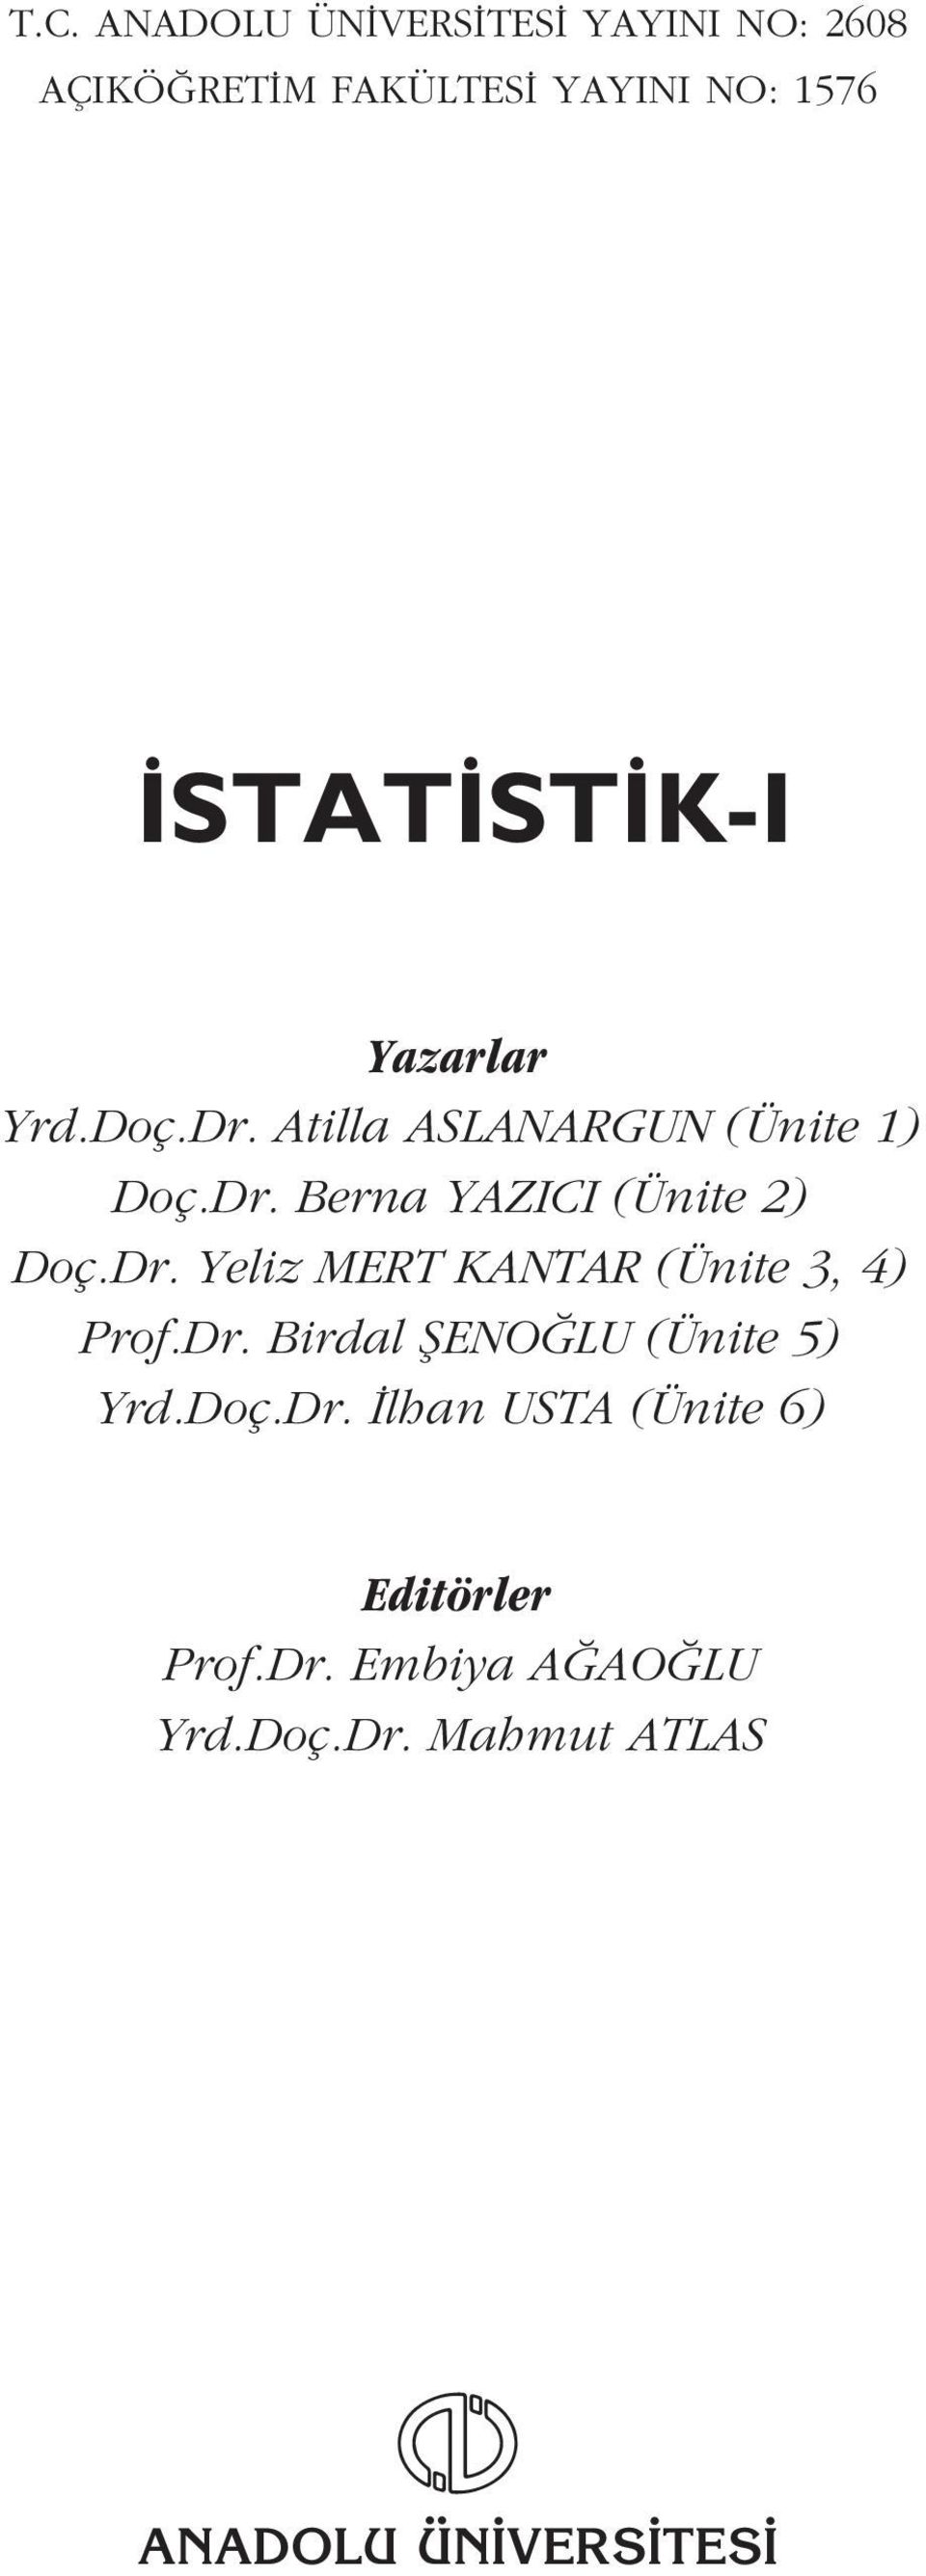 Dr. Yeliz MERT KANTAR (Ünite 3, 4) Prof.Dr. Birdal fieno LU (Ünite 5) Yrd.Doç.Dr. lhan USTA (Ünite 6) Editörler Prof.